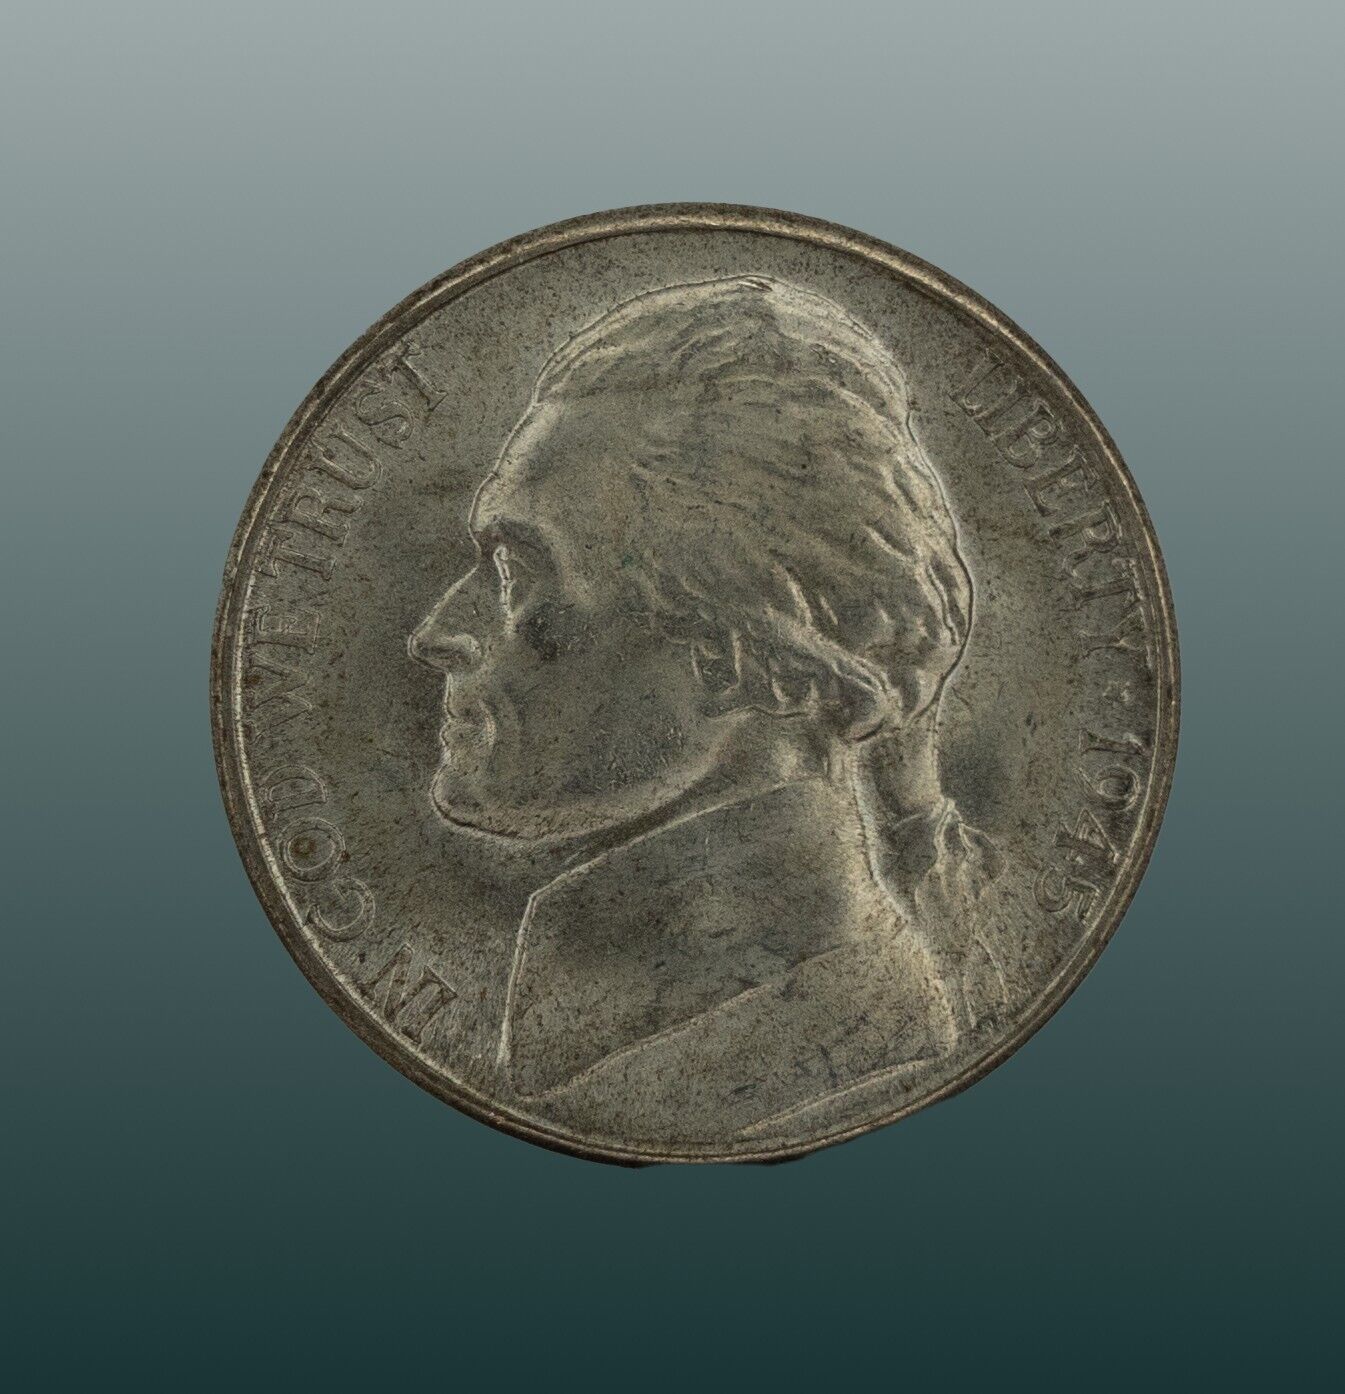 1945 Jefferson Silver Nickel / Uncirculated / Very Good Condition